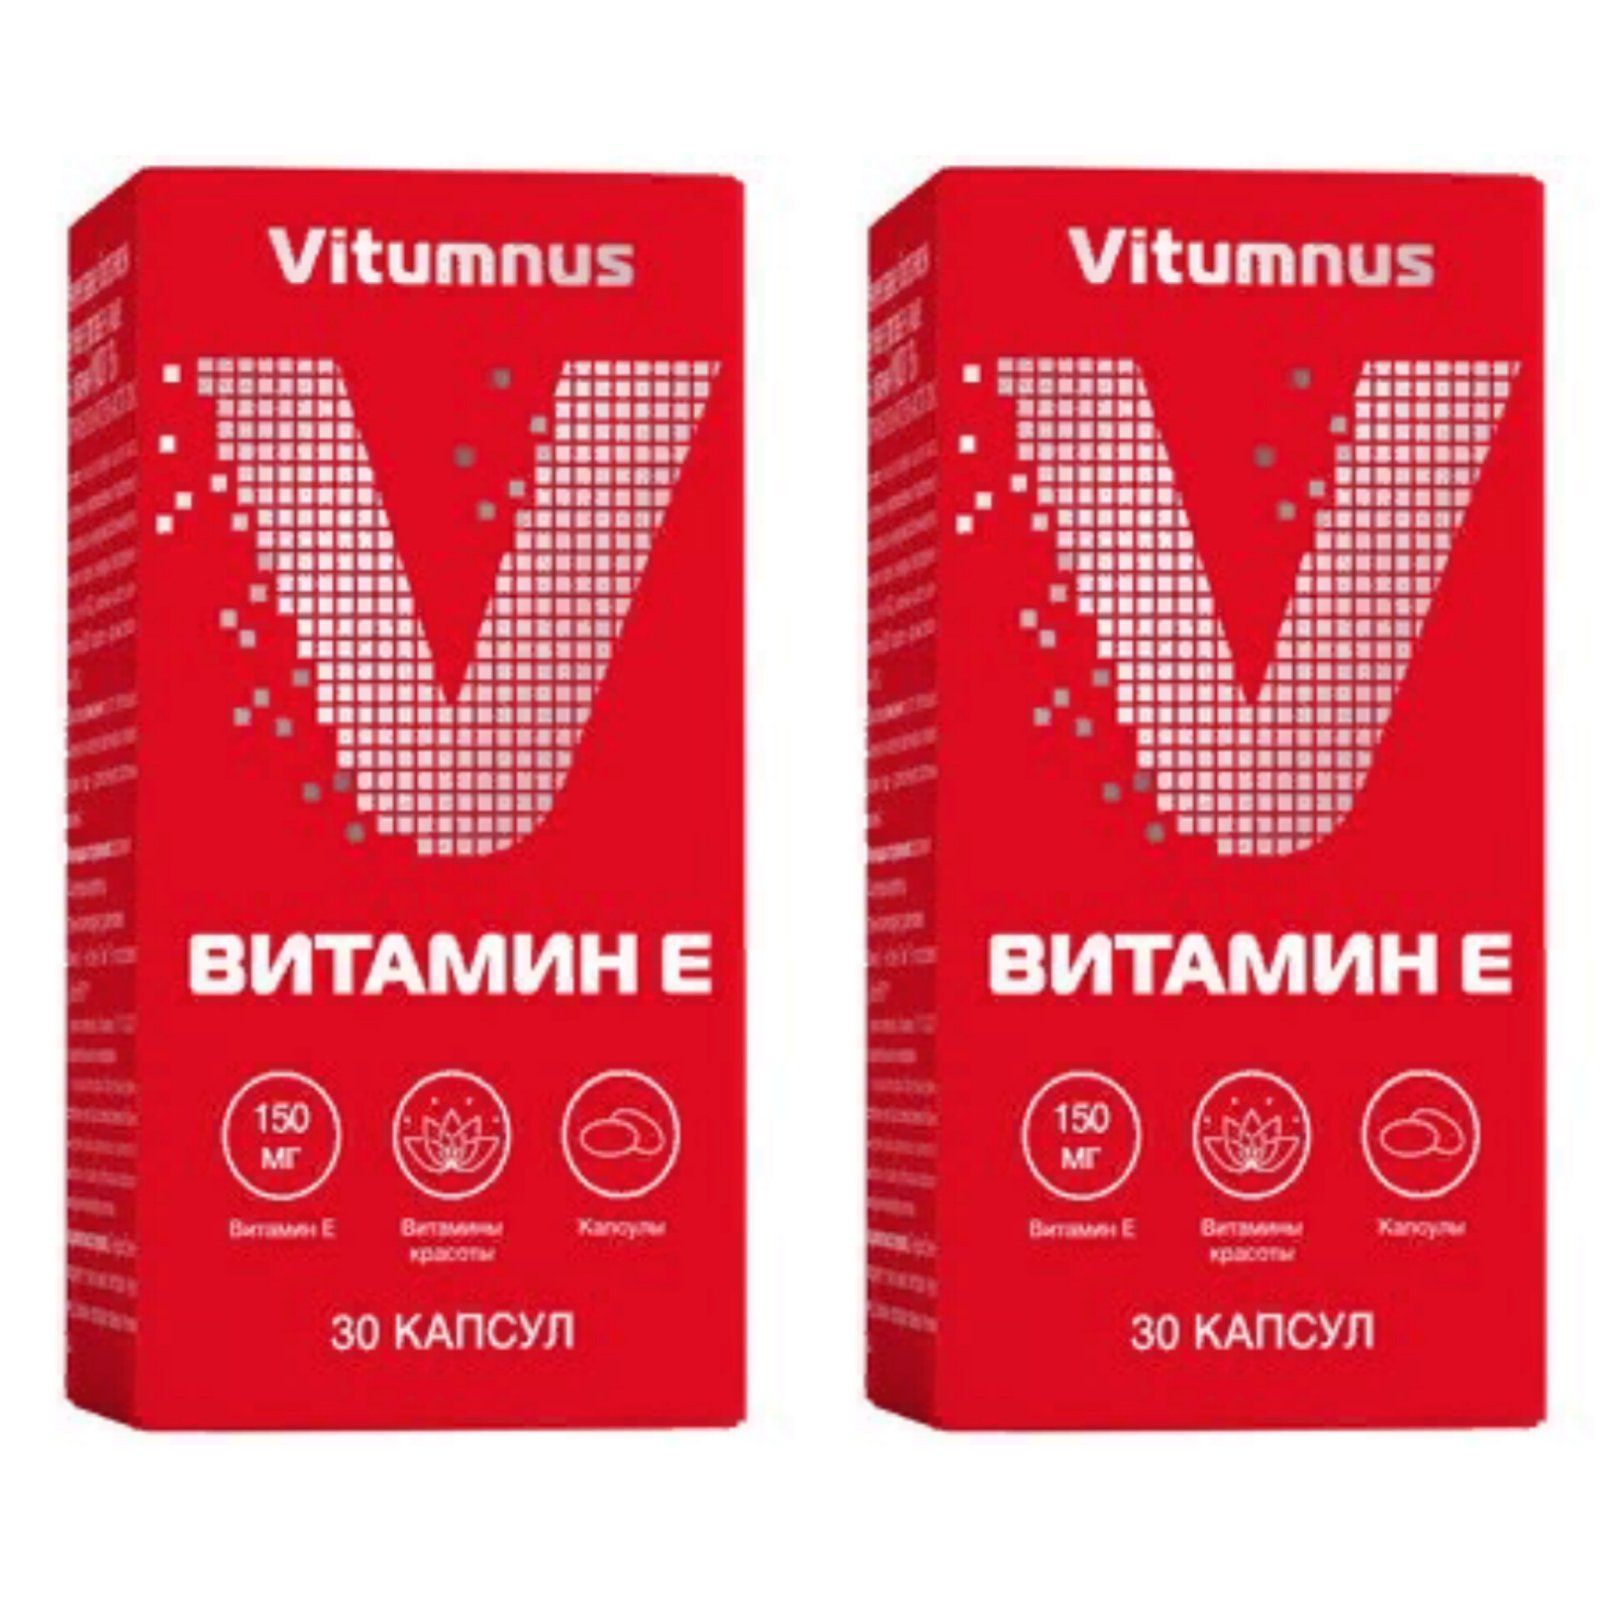 Vitumnus д3 витамин. Vitumnus витамины. Vitumnus витаминно минеральный комплекс. Vitumnus витамины для женщин. Vitumnus Beauty Complex.